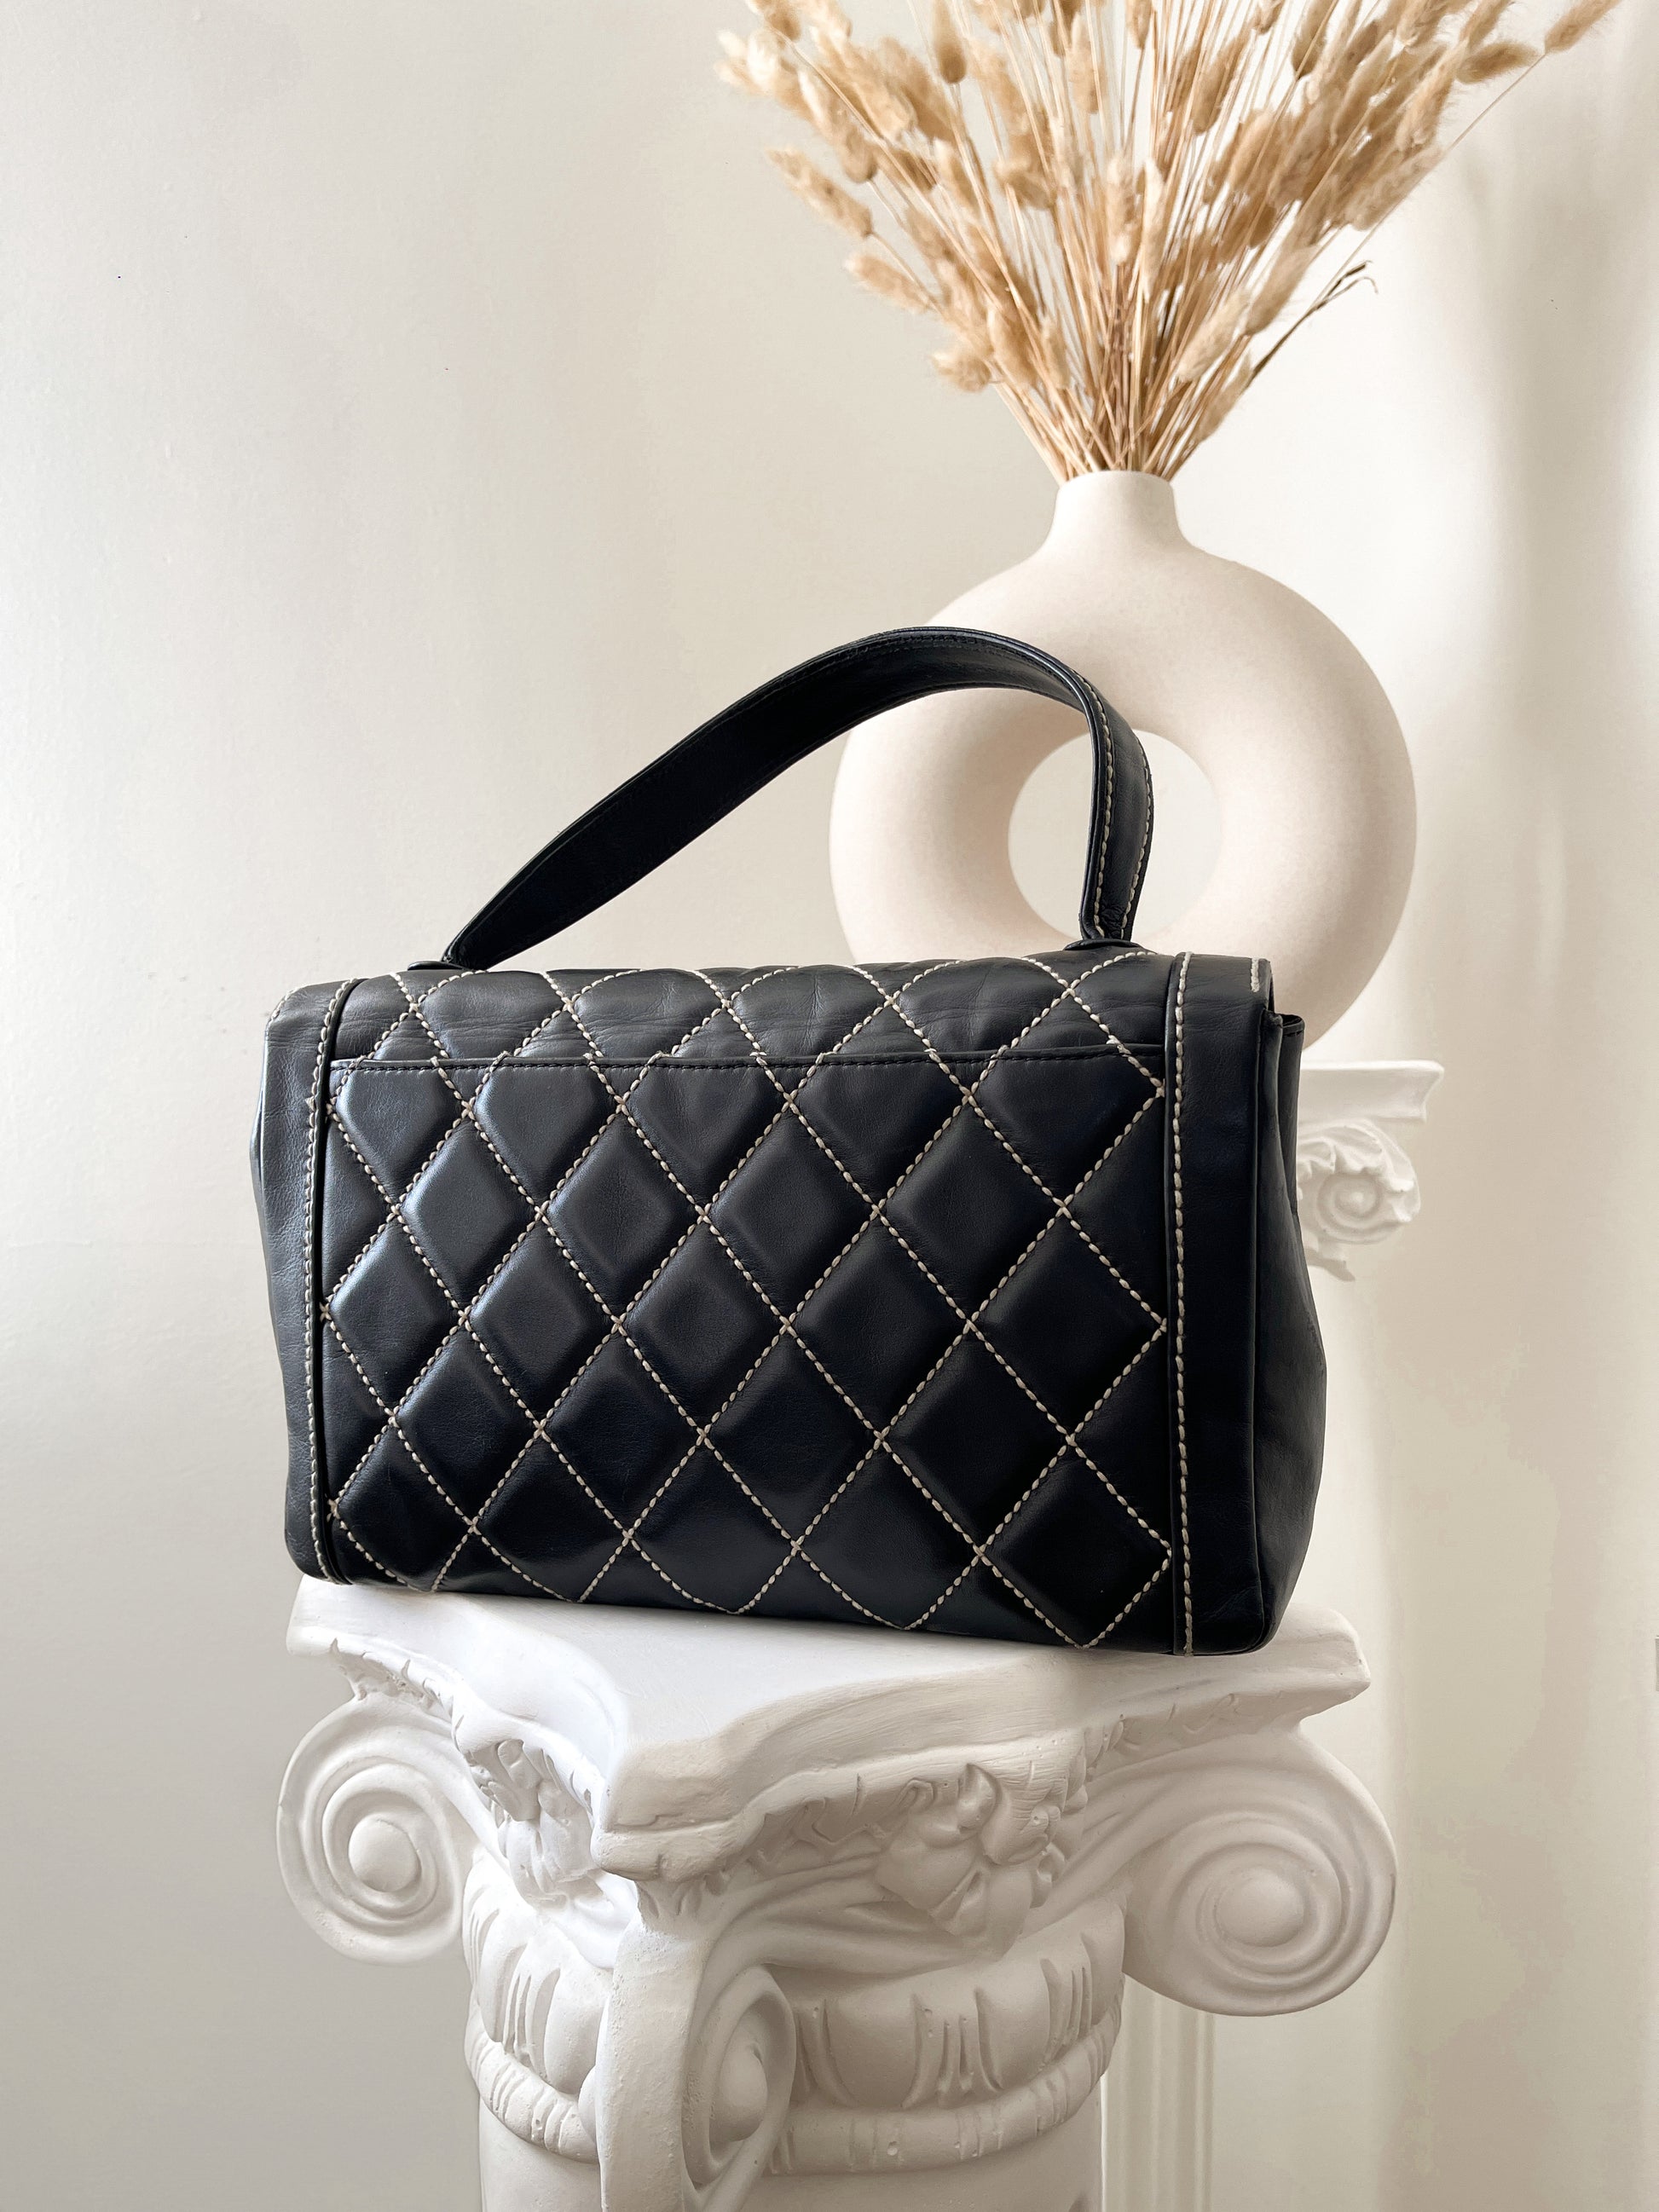 Chanel Black Small Flap Bag